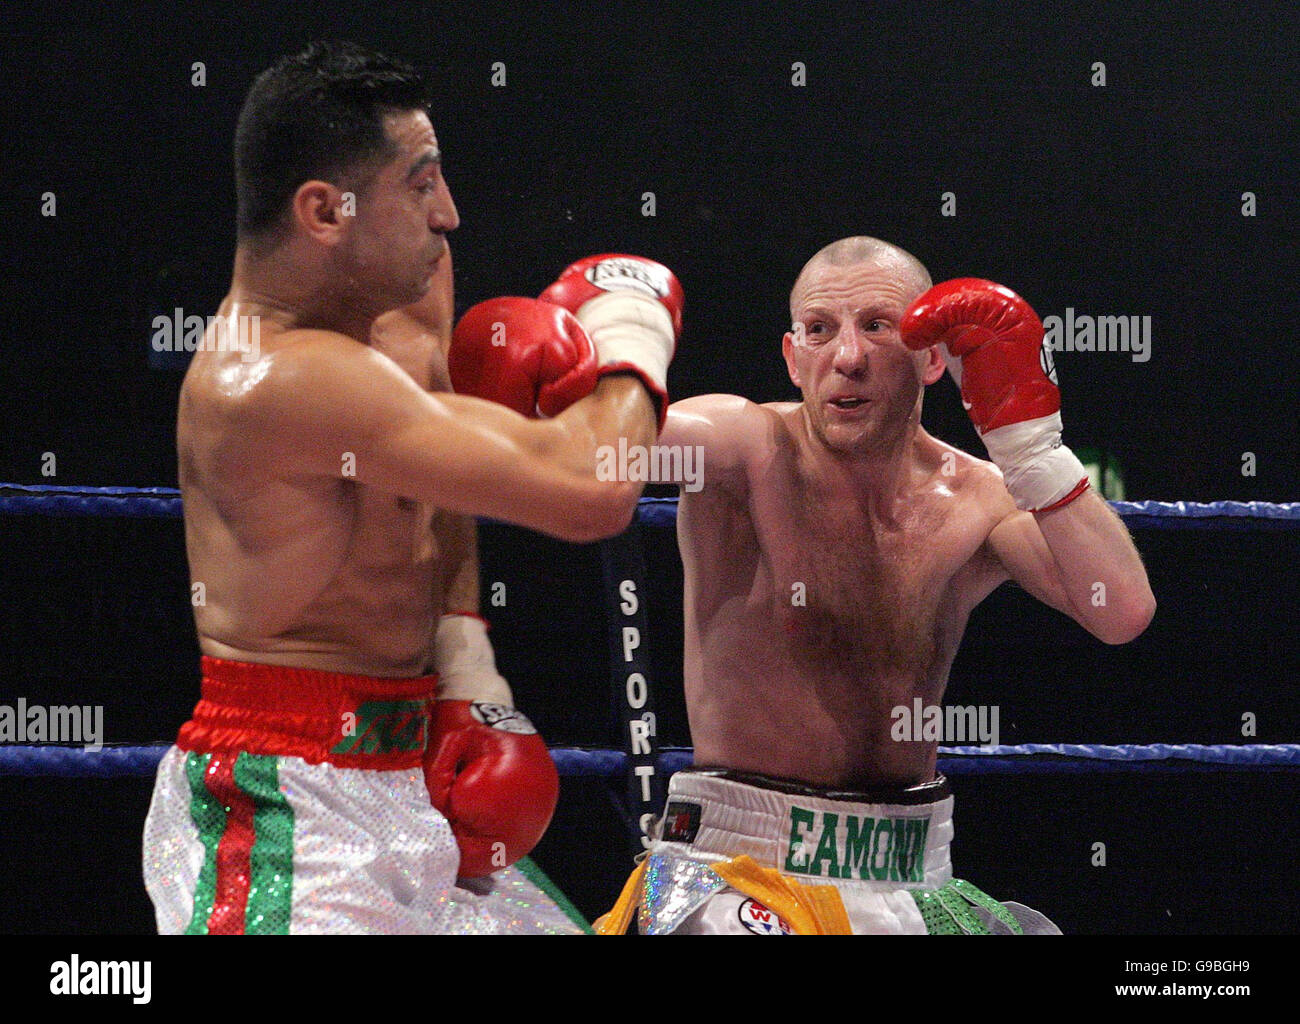 Eamonn Magee (R) de Irlanda del Norte y Takaloo de Inglaterra durante la pelea de peso de WBU en Kings Hall, Belfast. Foto de stock